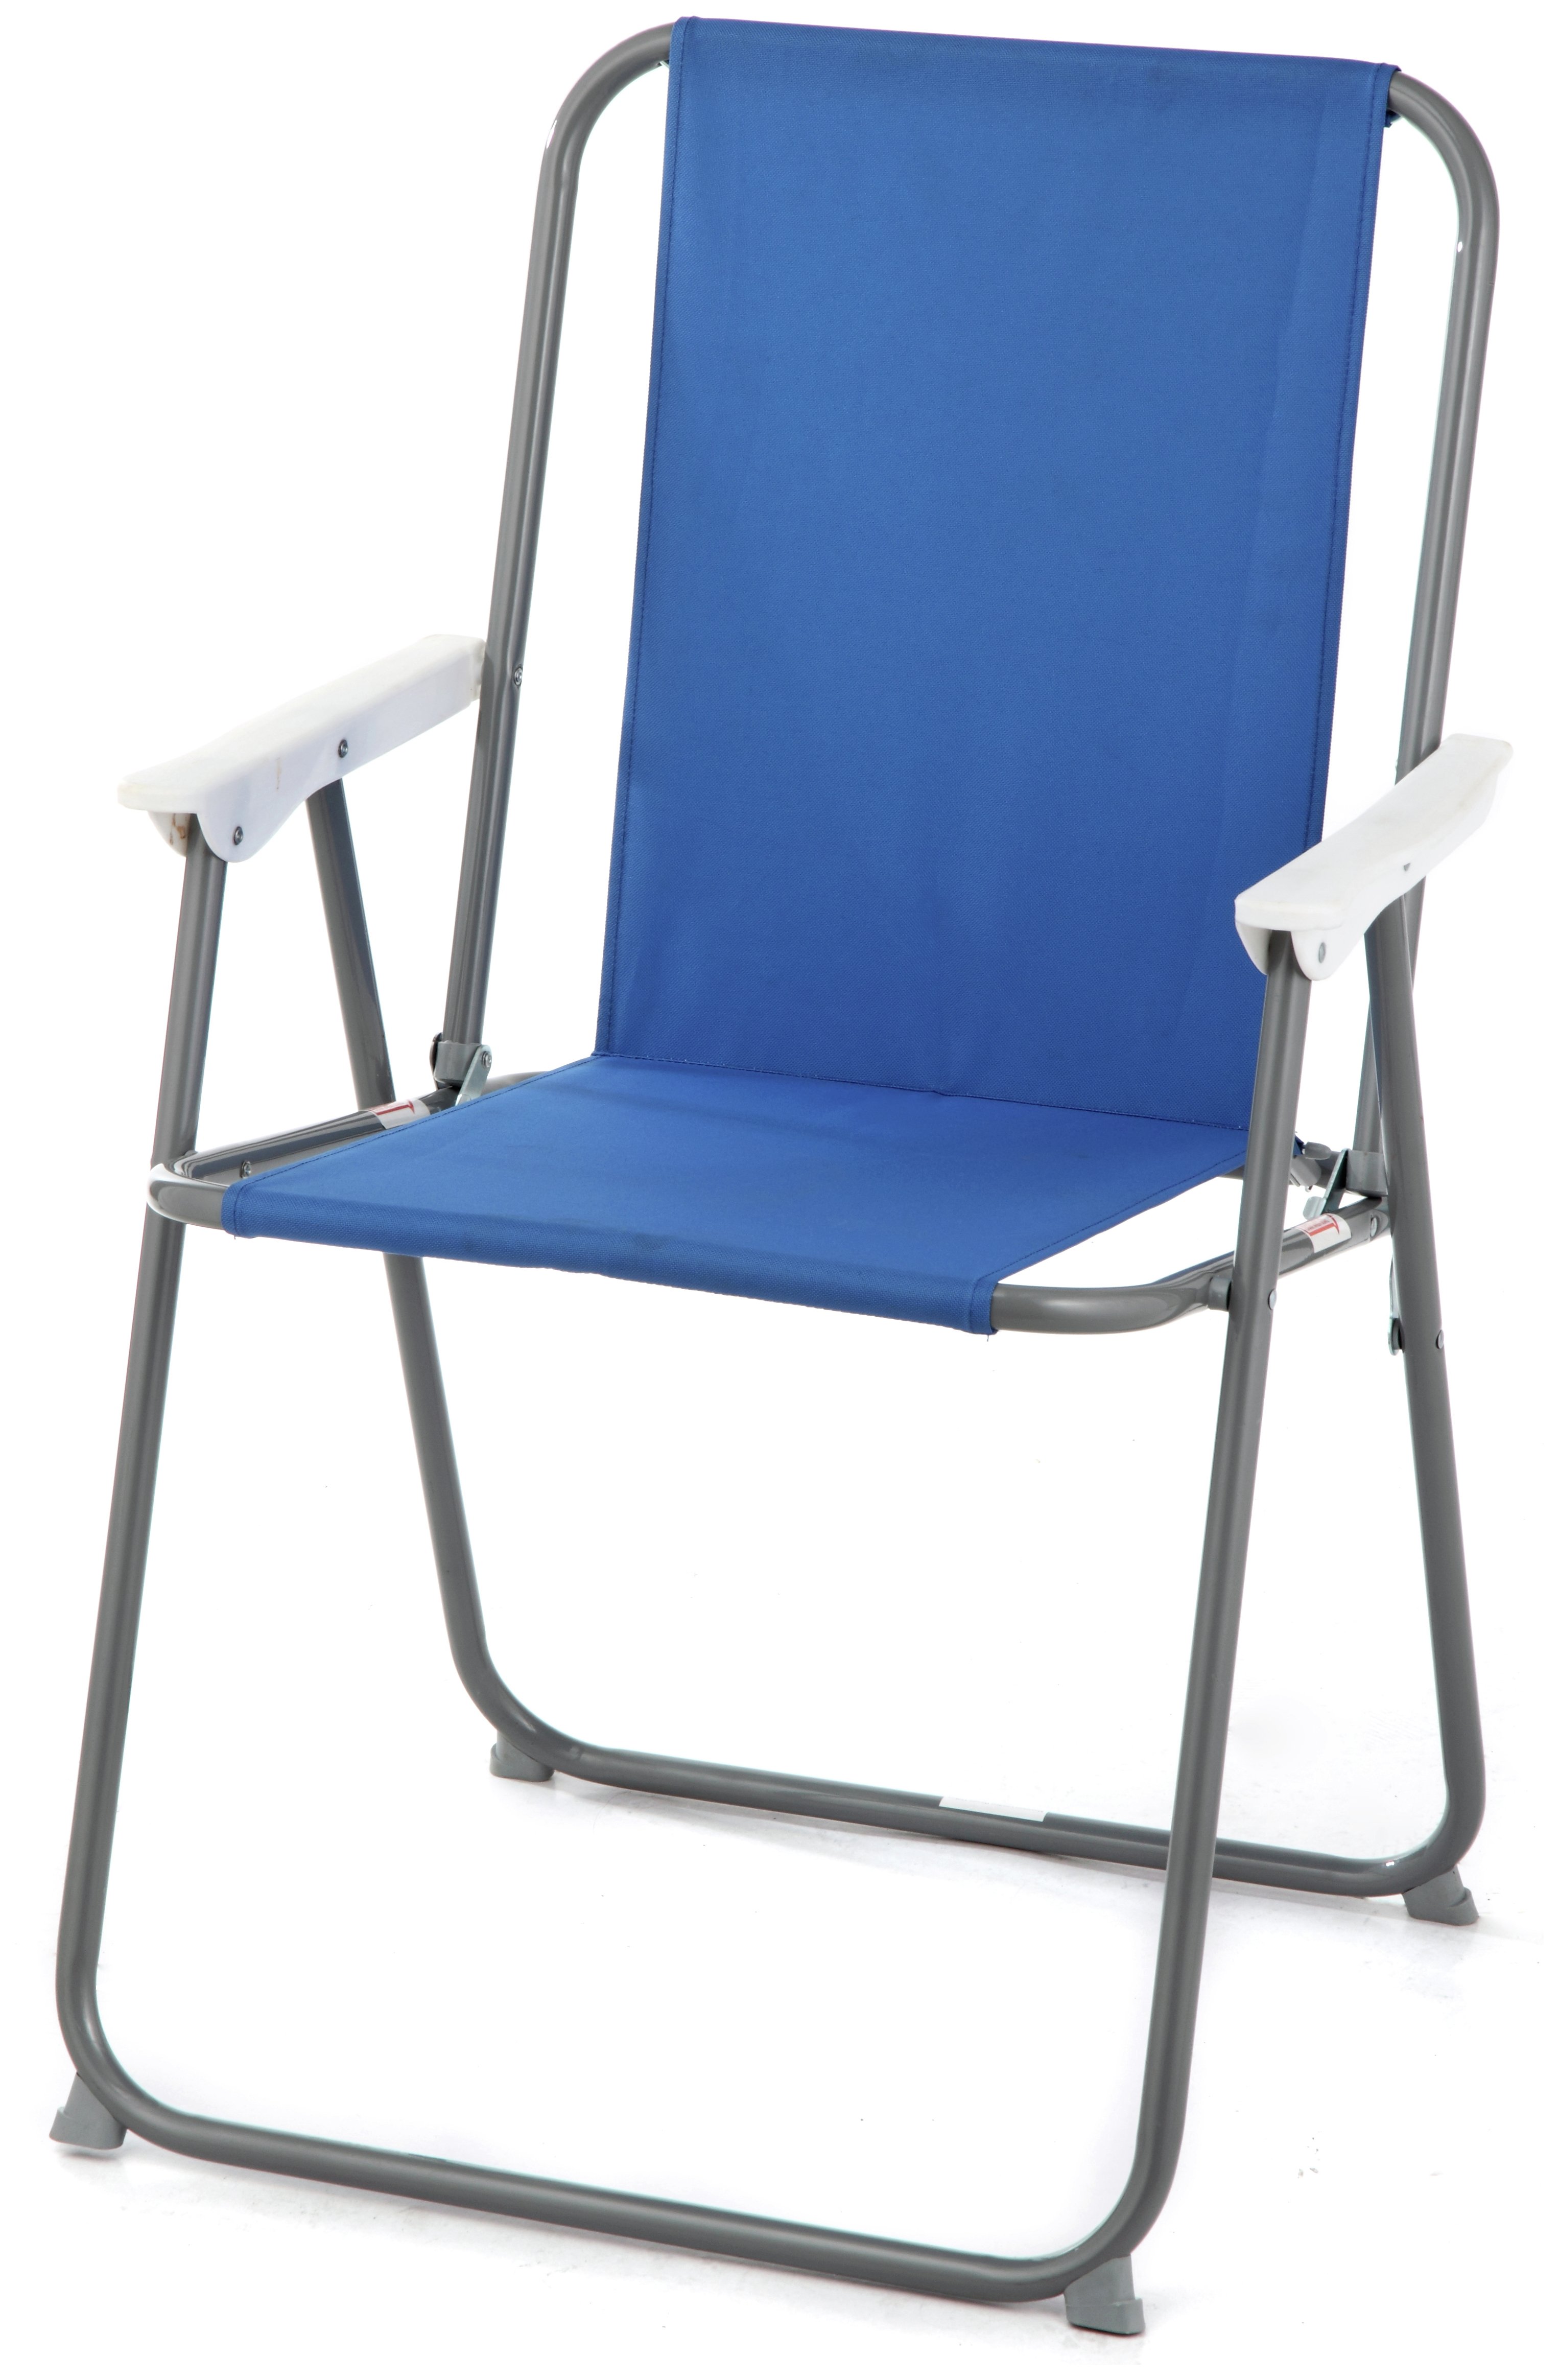 folding garden chairs buy picnic chair - blue at argos.co.uk - your online shop for garden EVZVQNP